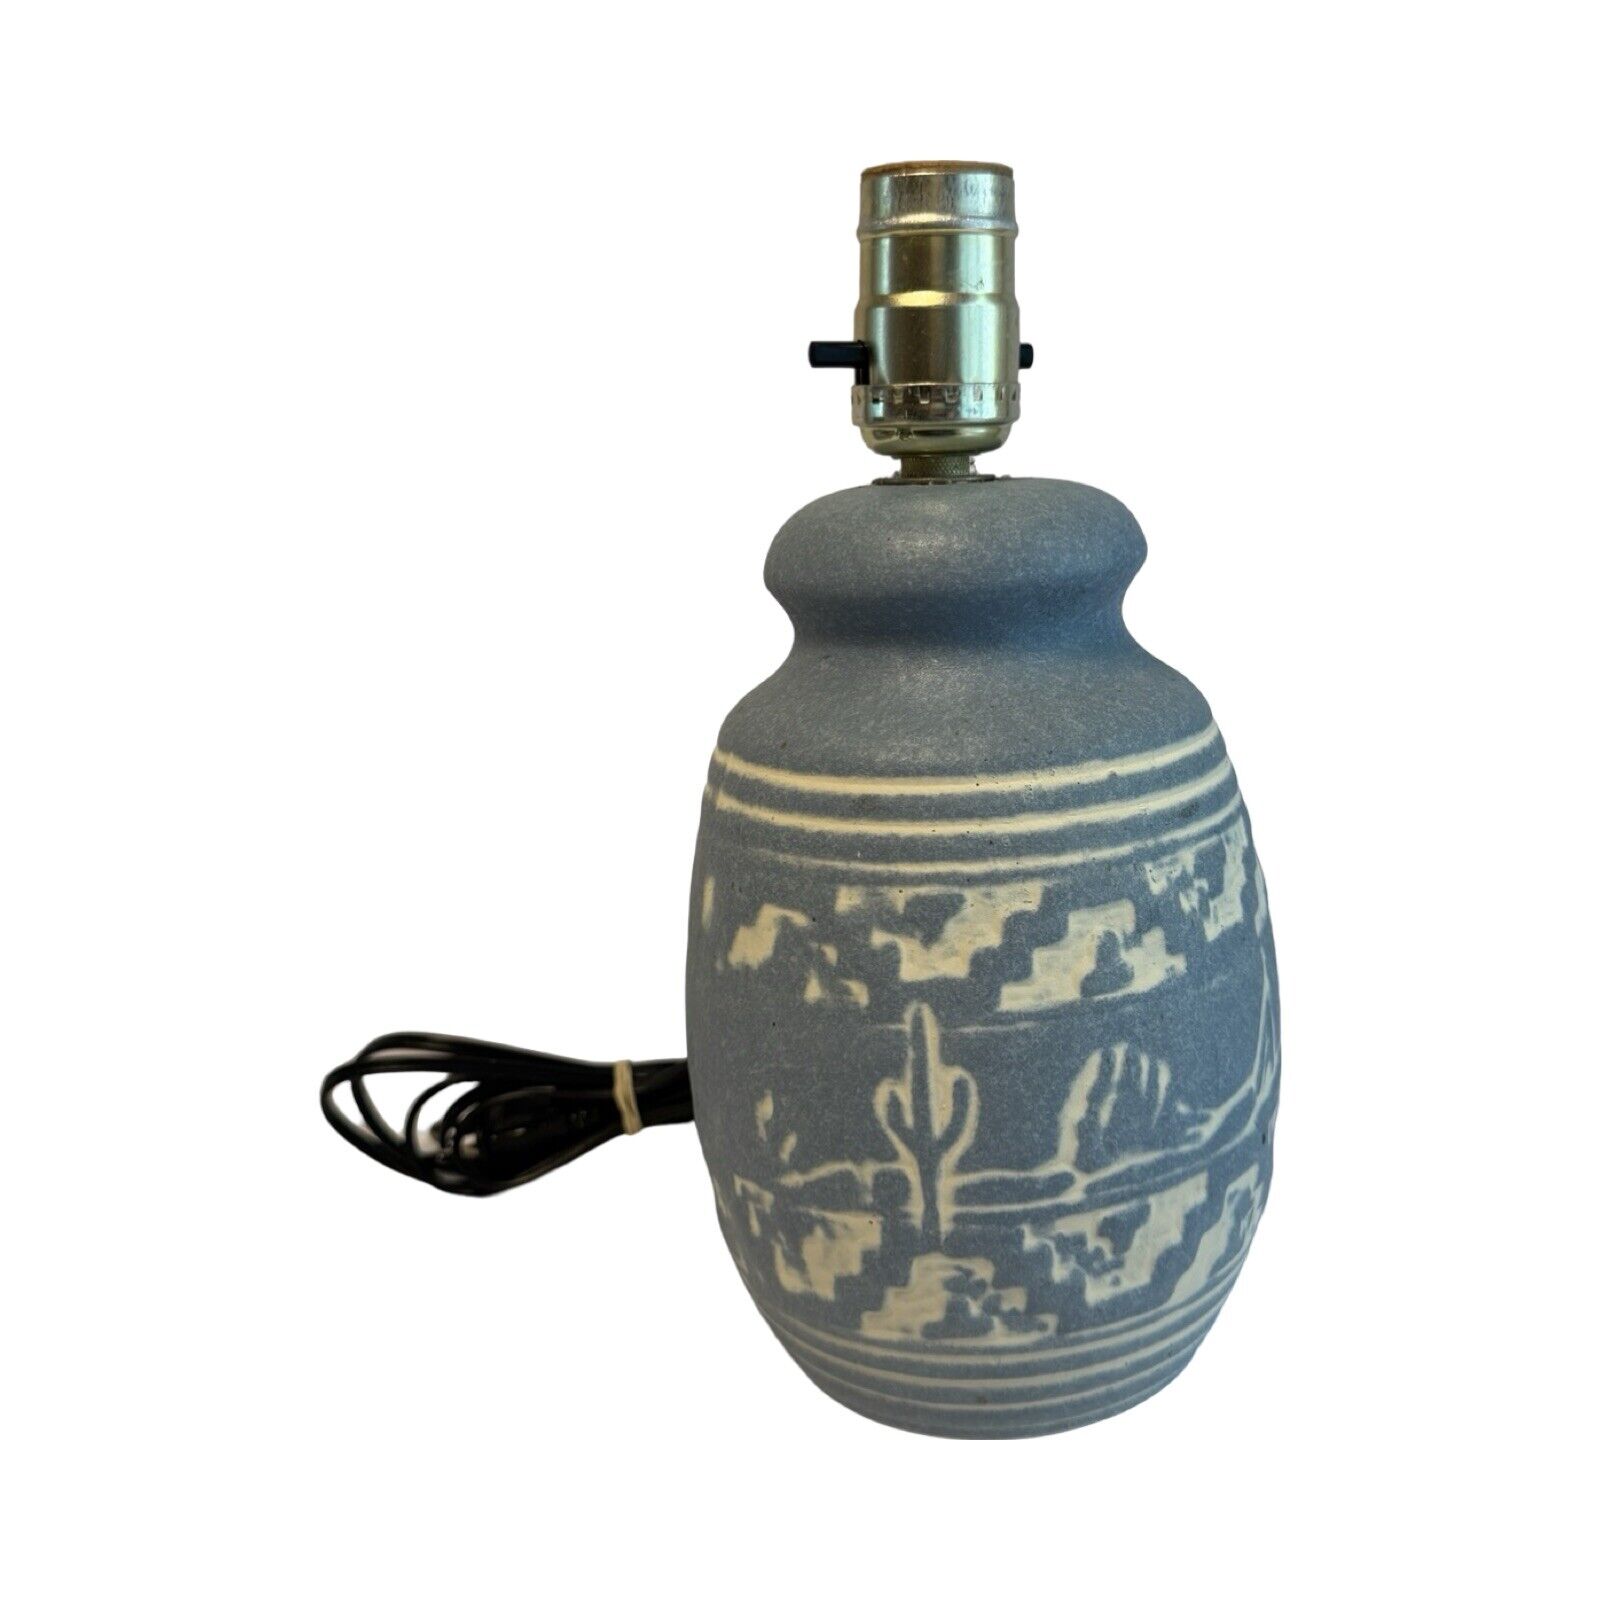 Ceramic Lamp WORKS Southwest Carved Accent Table Native Western Vintage